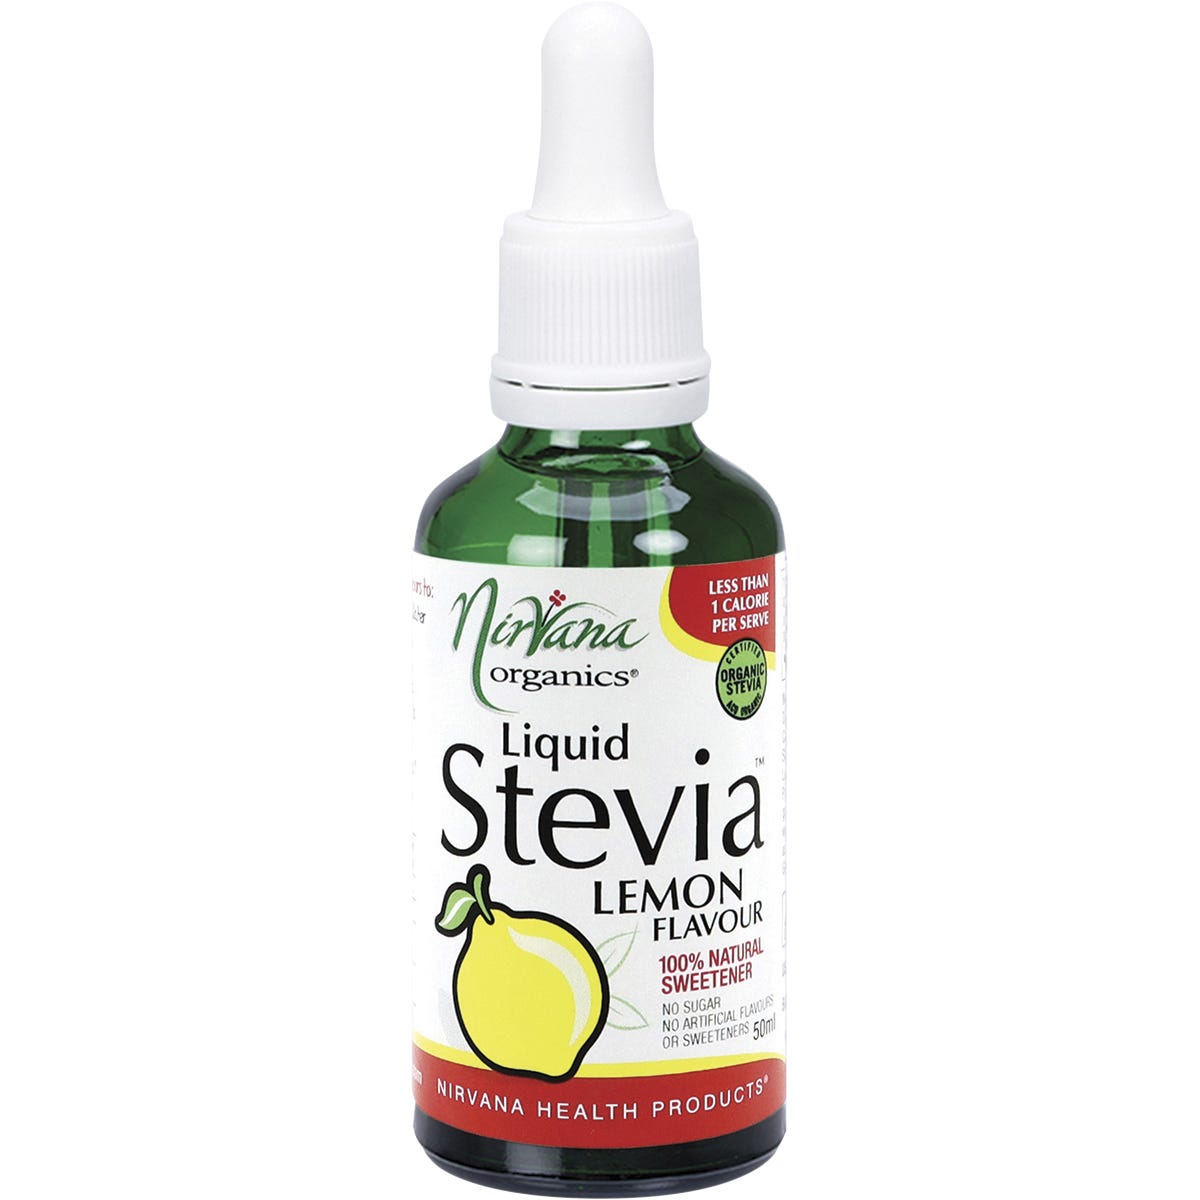 Nirvana Organics Liquid Stevia Lemon 50ml - Dr Earth - Sweeteners